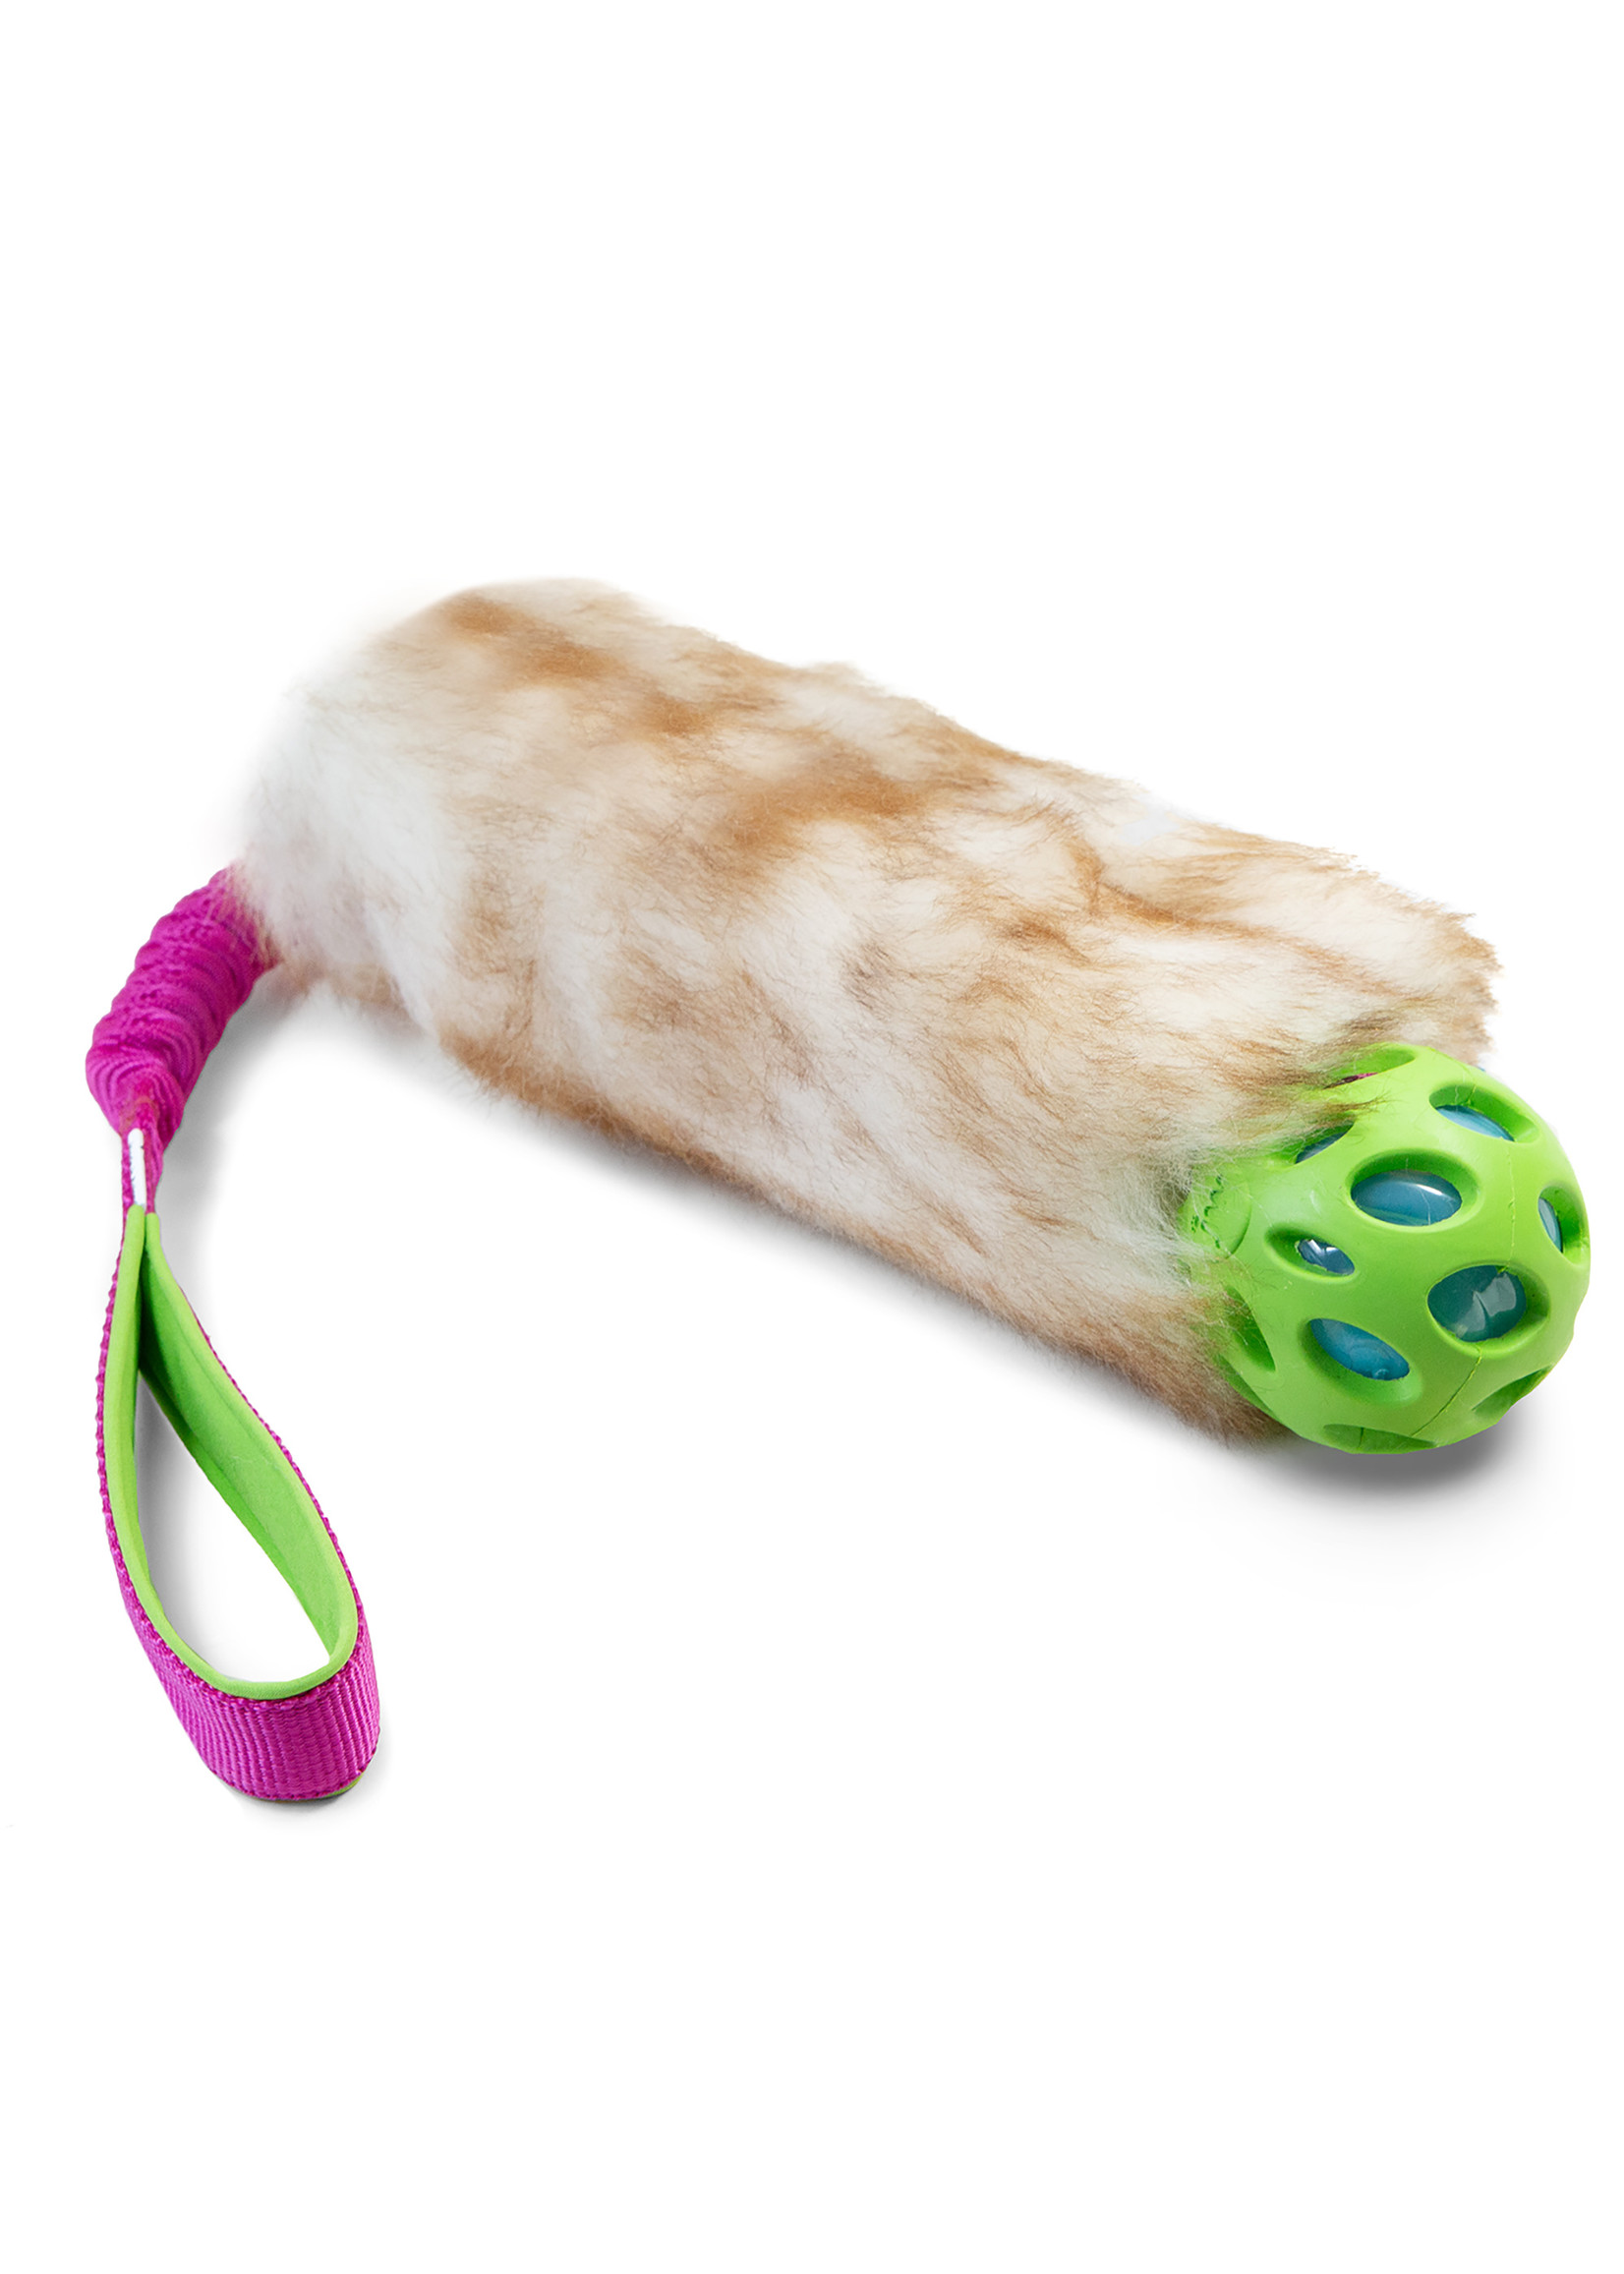 Zayma Craft Sheepskin tug toy with bungee handle and JW PET Crackle Ball